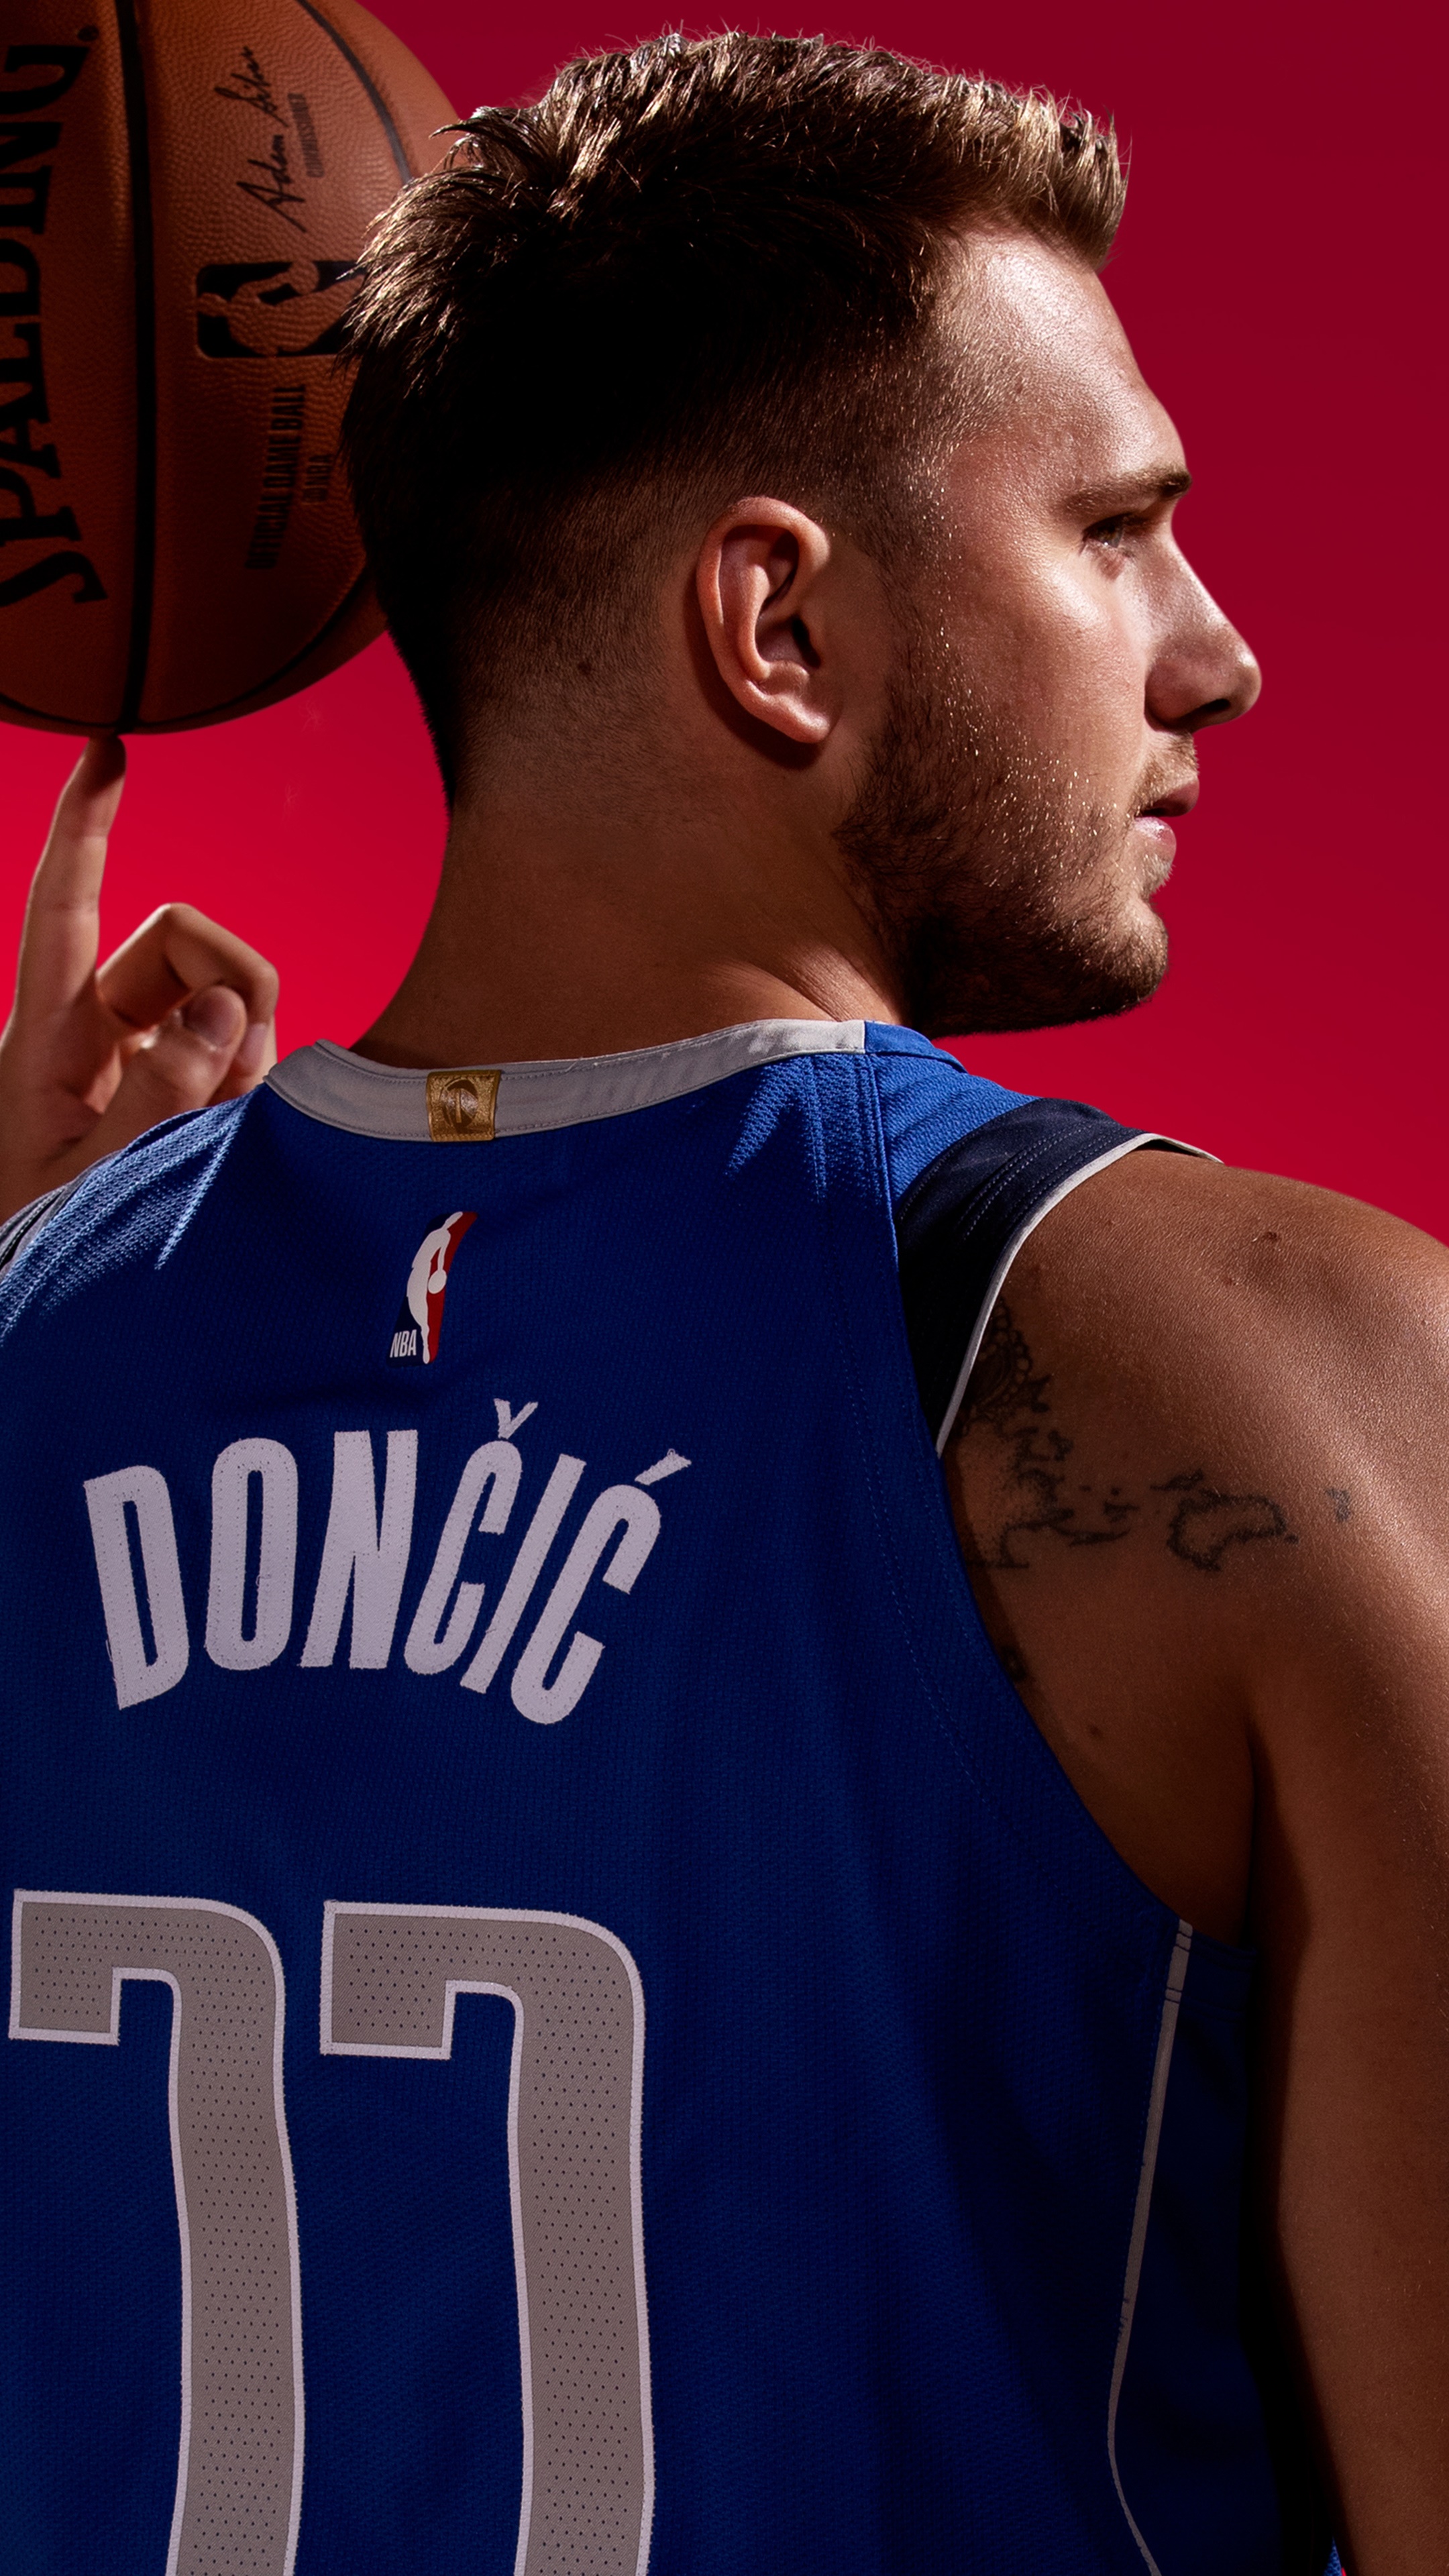 Luka Doncic NBA 2K22 Wallpapers